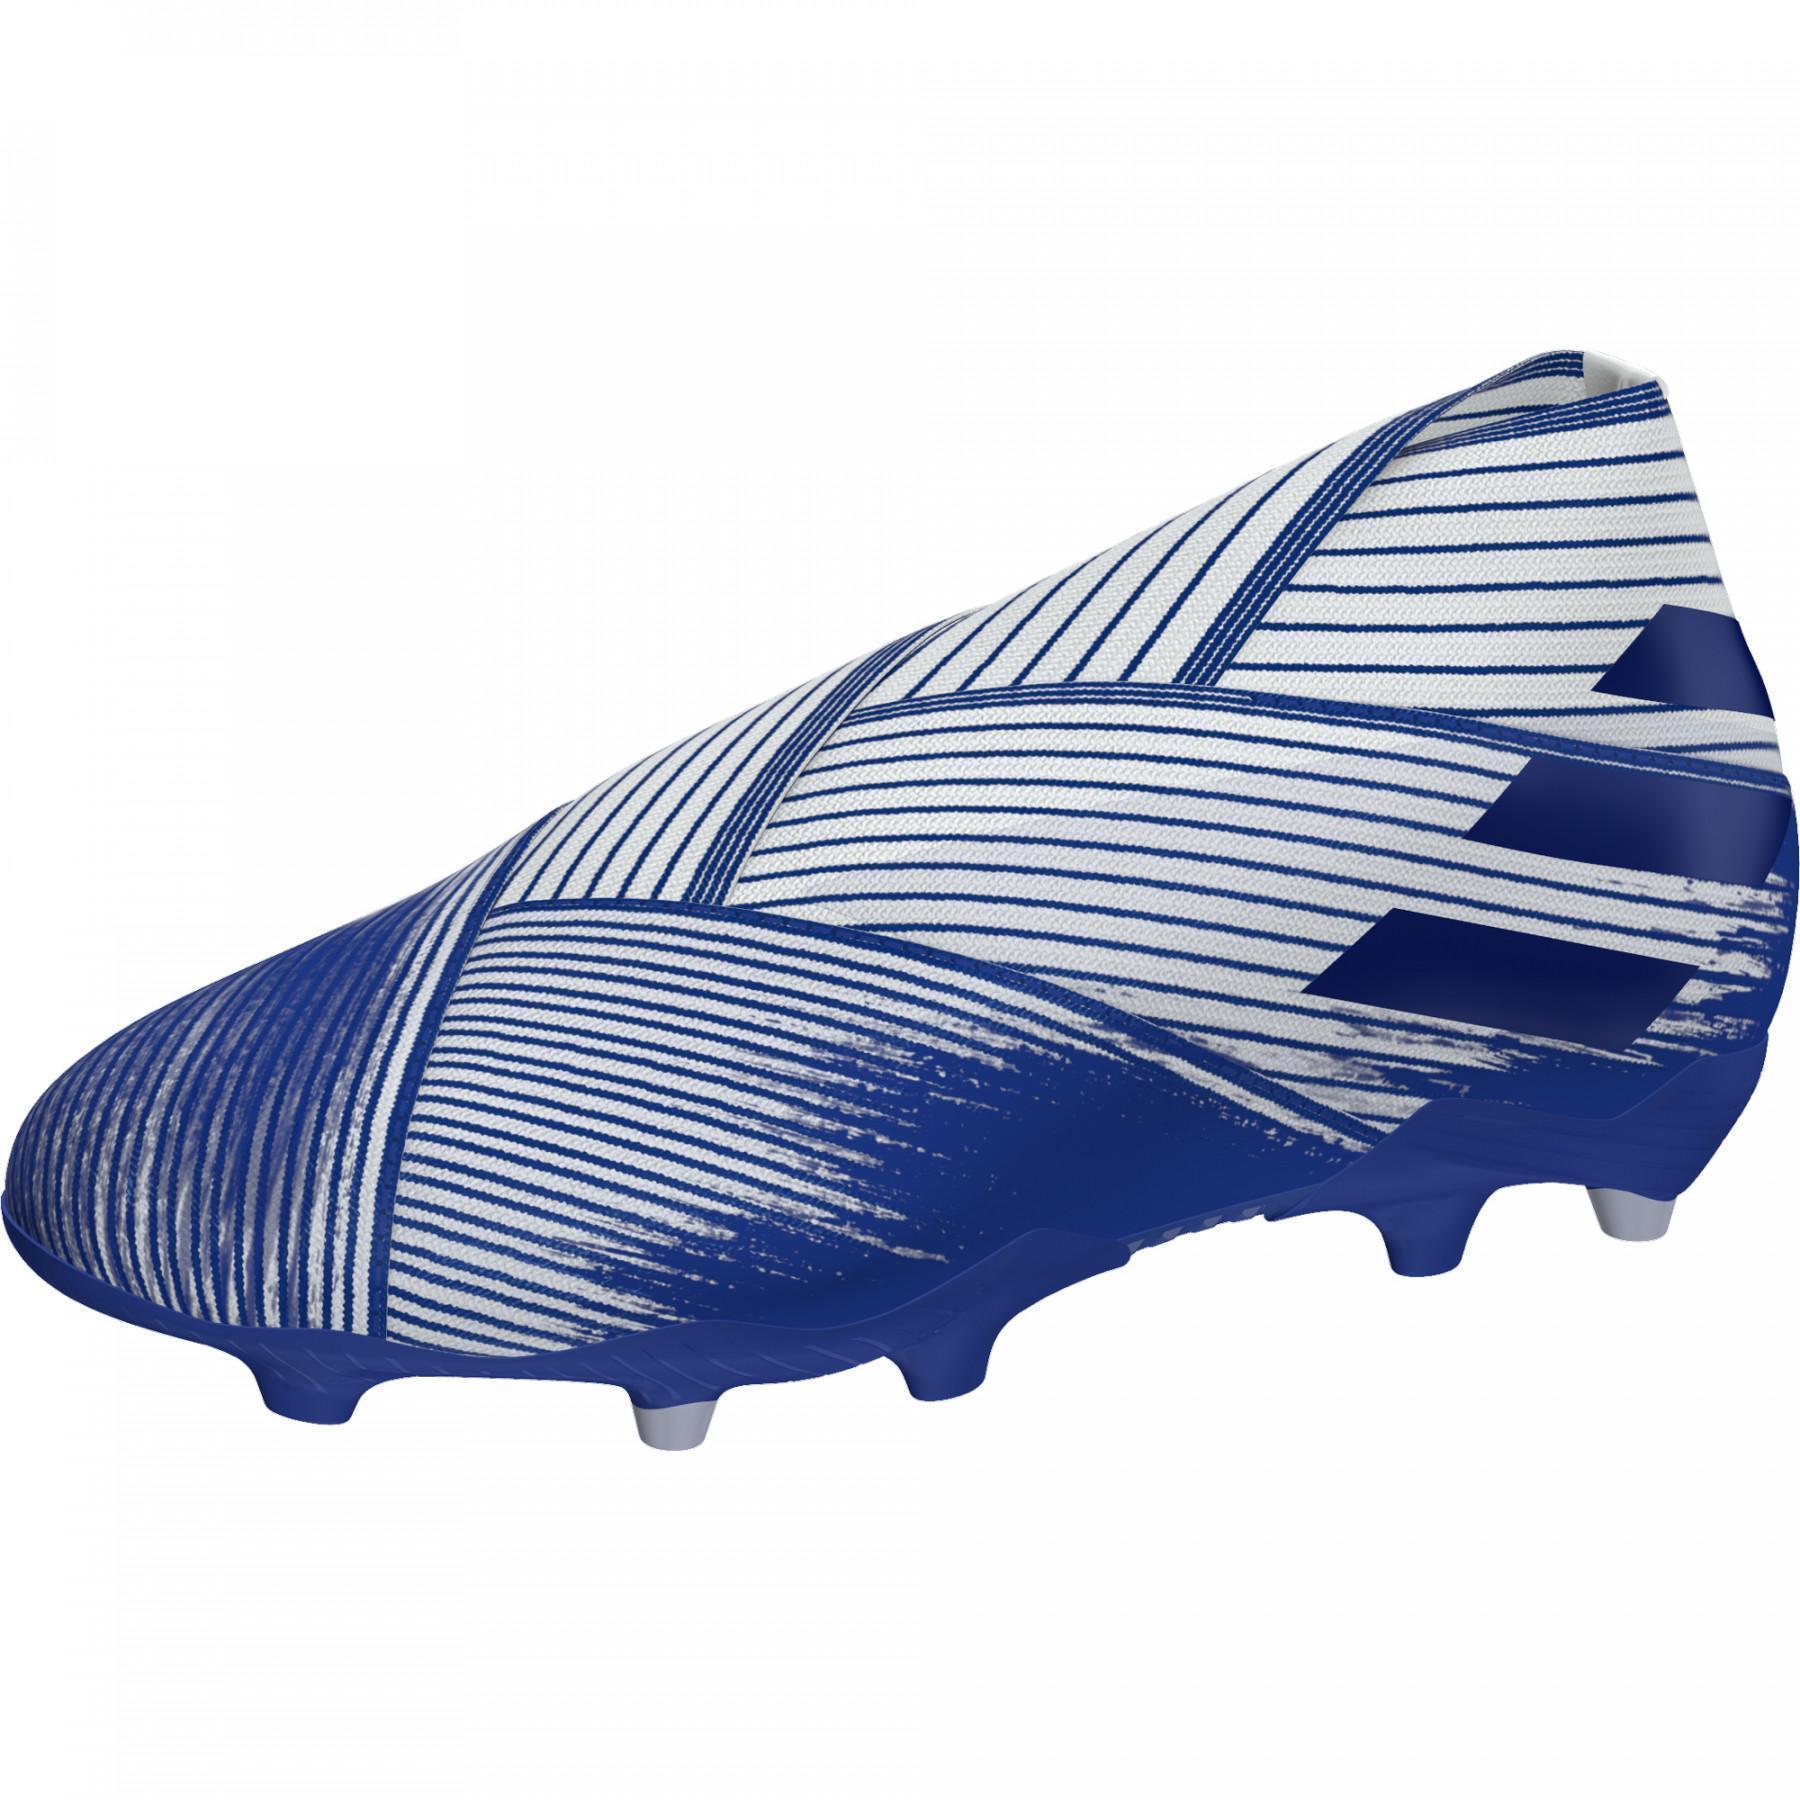 Children's soccer shoes adidas Nemeziz 19+ FG